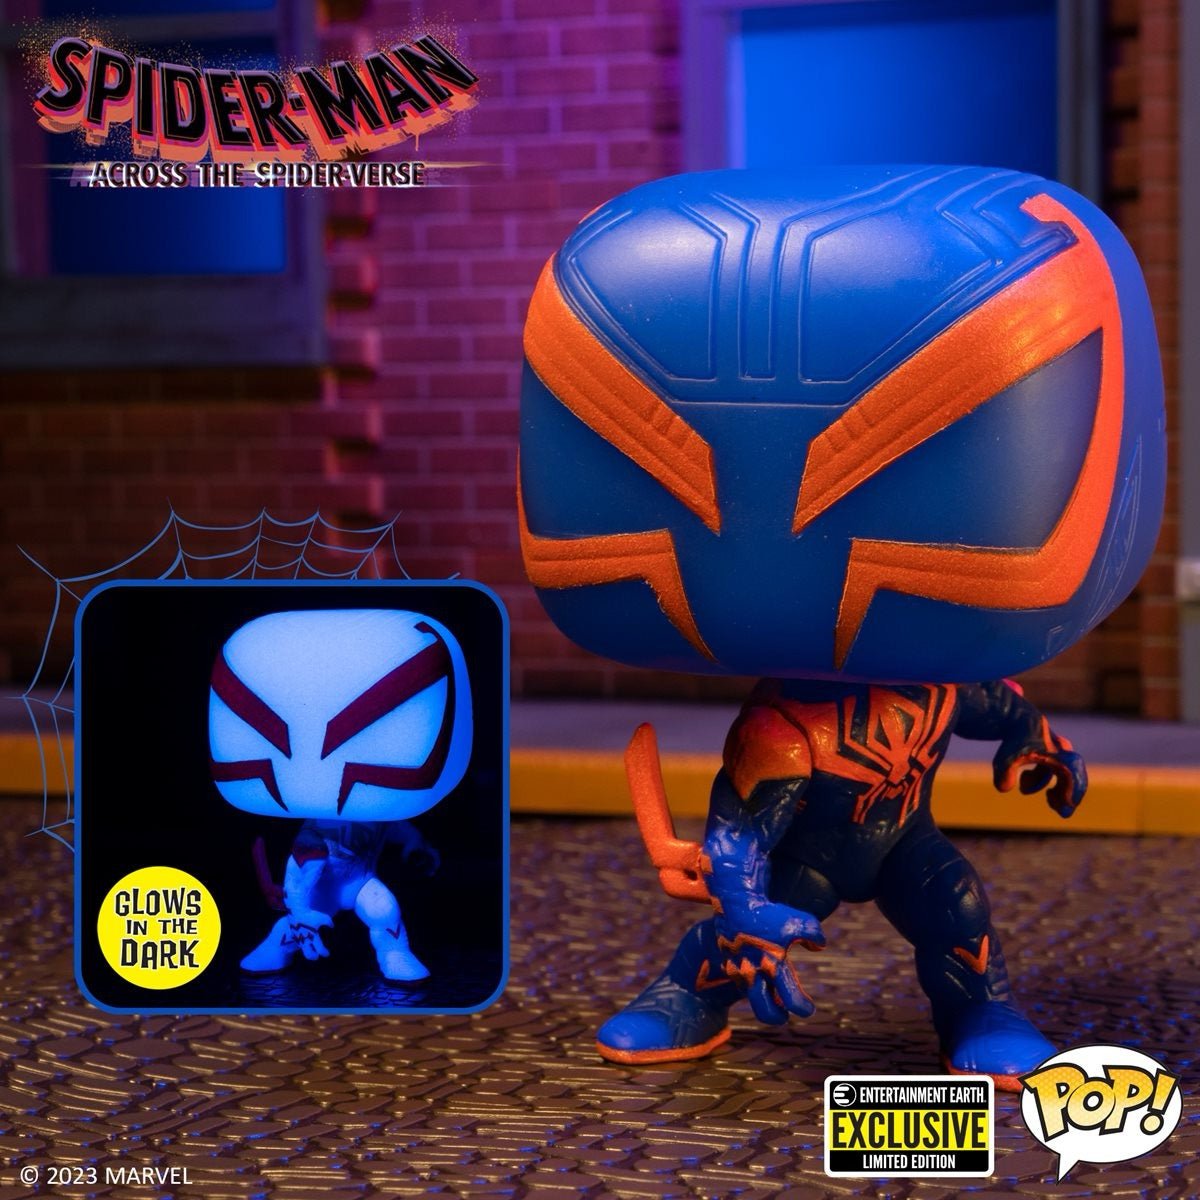 Spider-Man: Across the Spider-Verse Spider-Man 2099 Glow-in-the-Dark Pop! Vinyl Figure #1267 - Entertainment Earth Excl - gabescaveccc